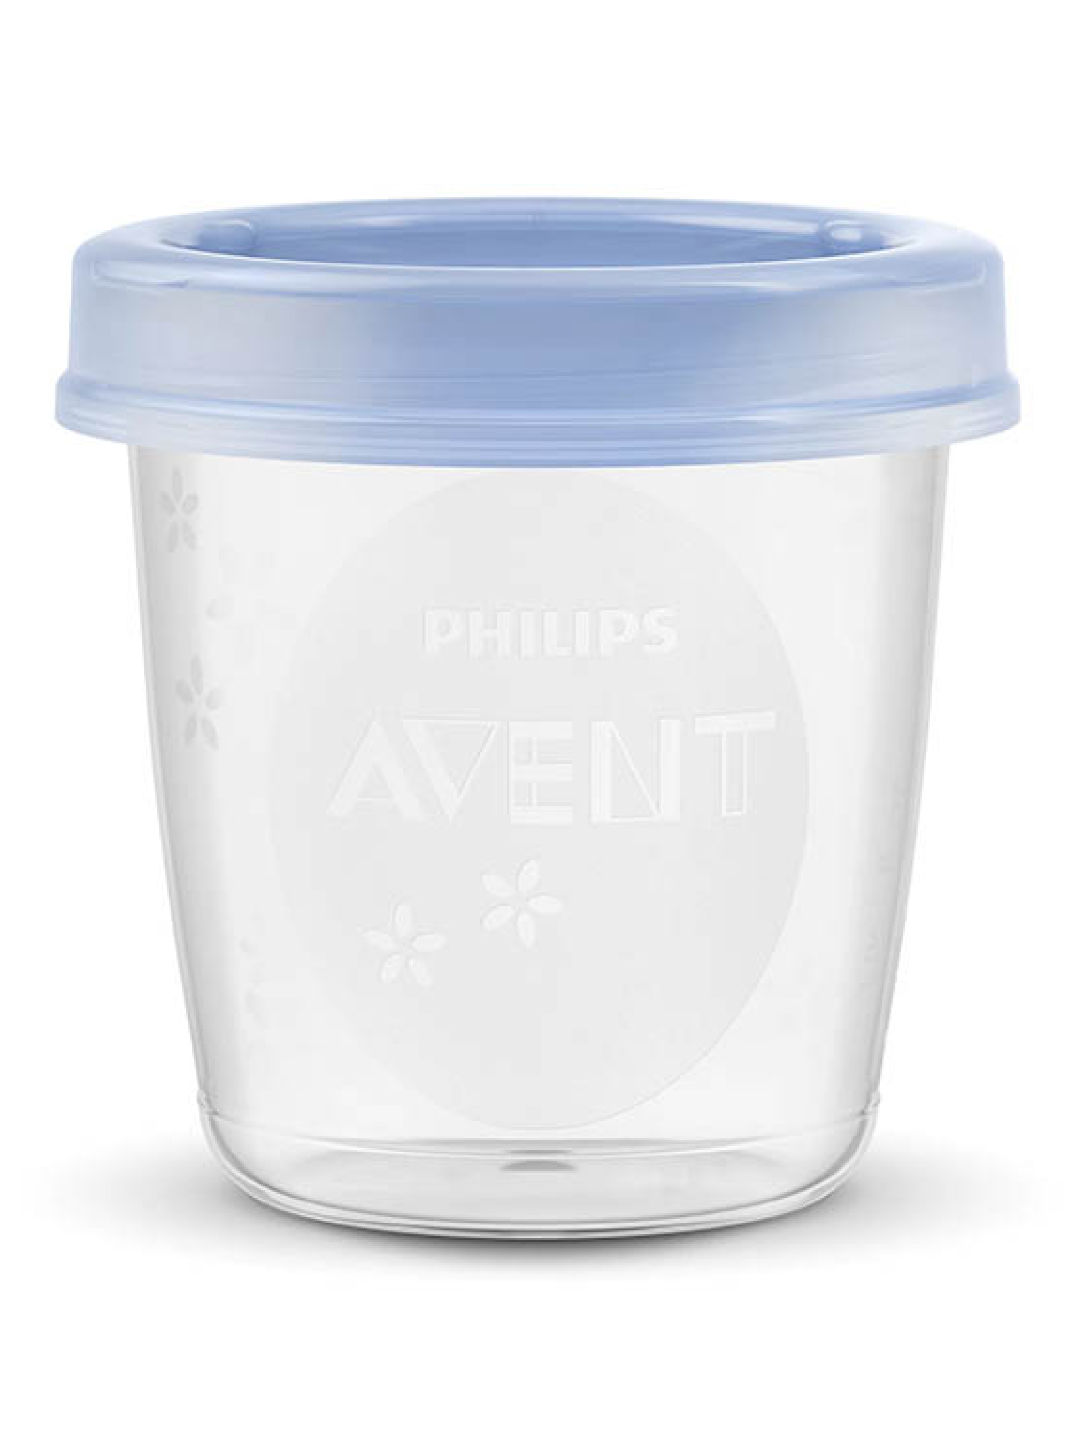 Avent Breast Milk Refill Cups (180ml)